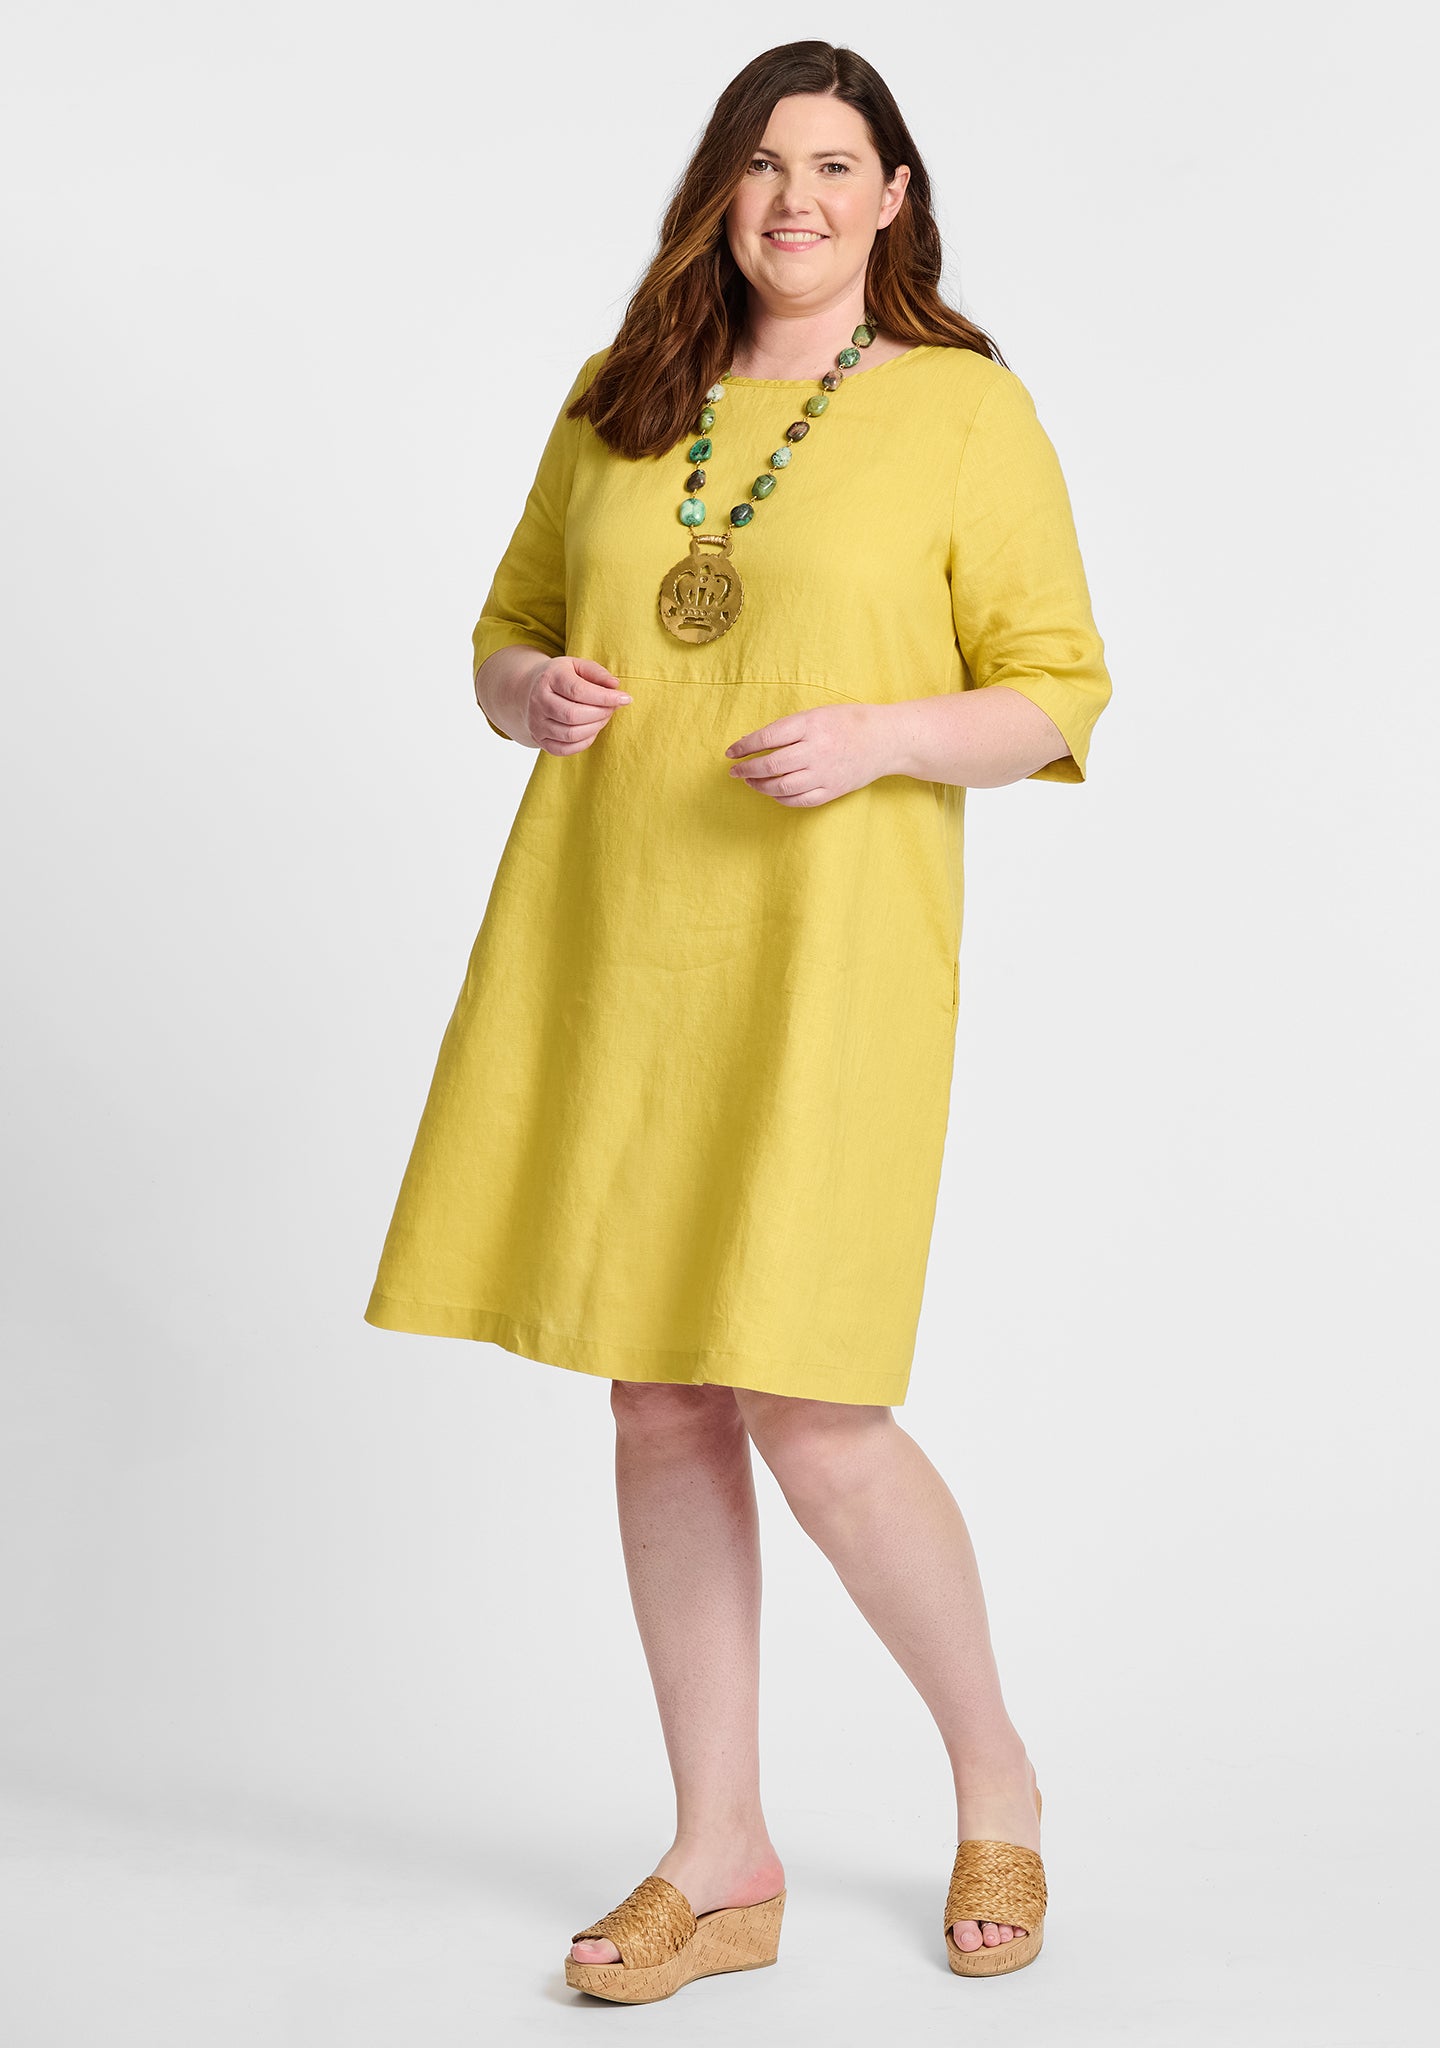 FLAX linen dress in yellow